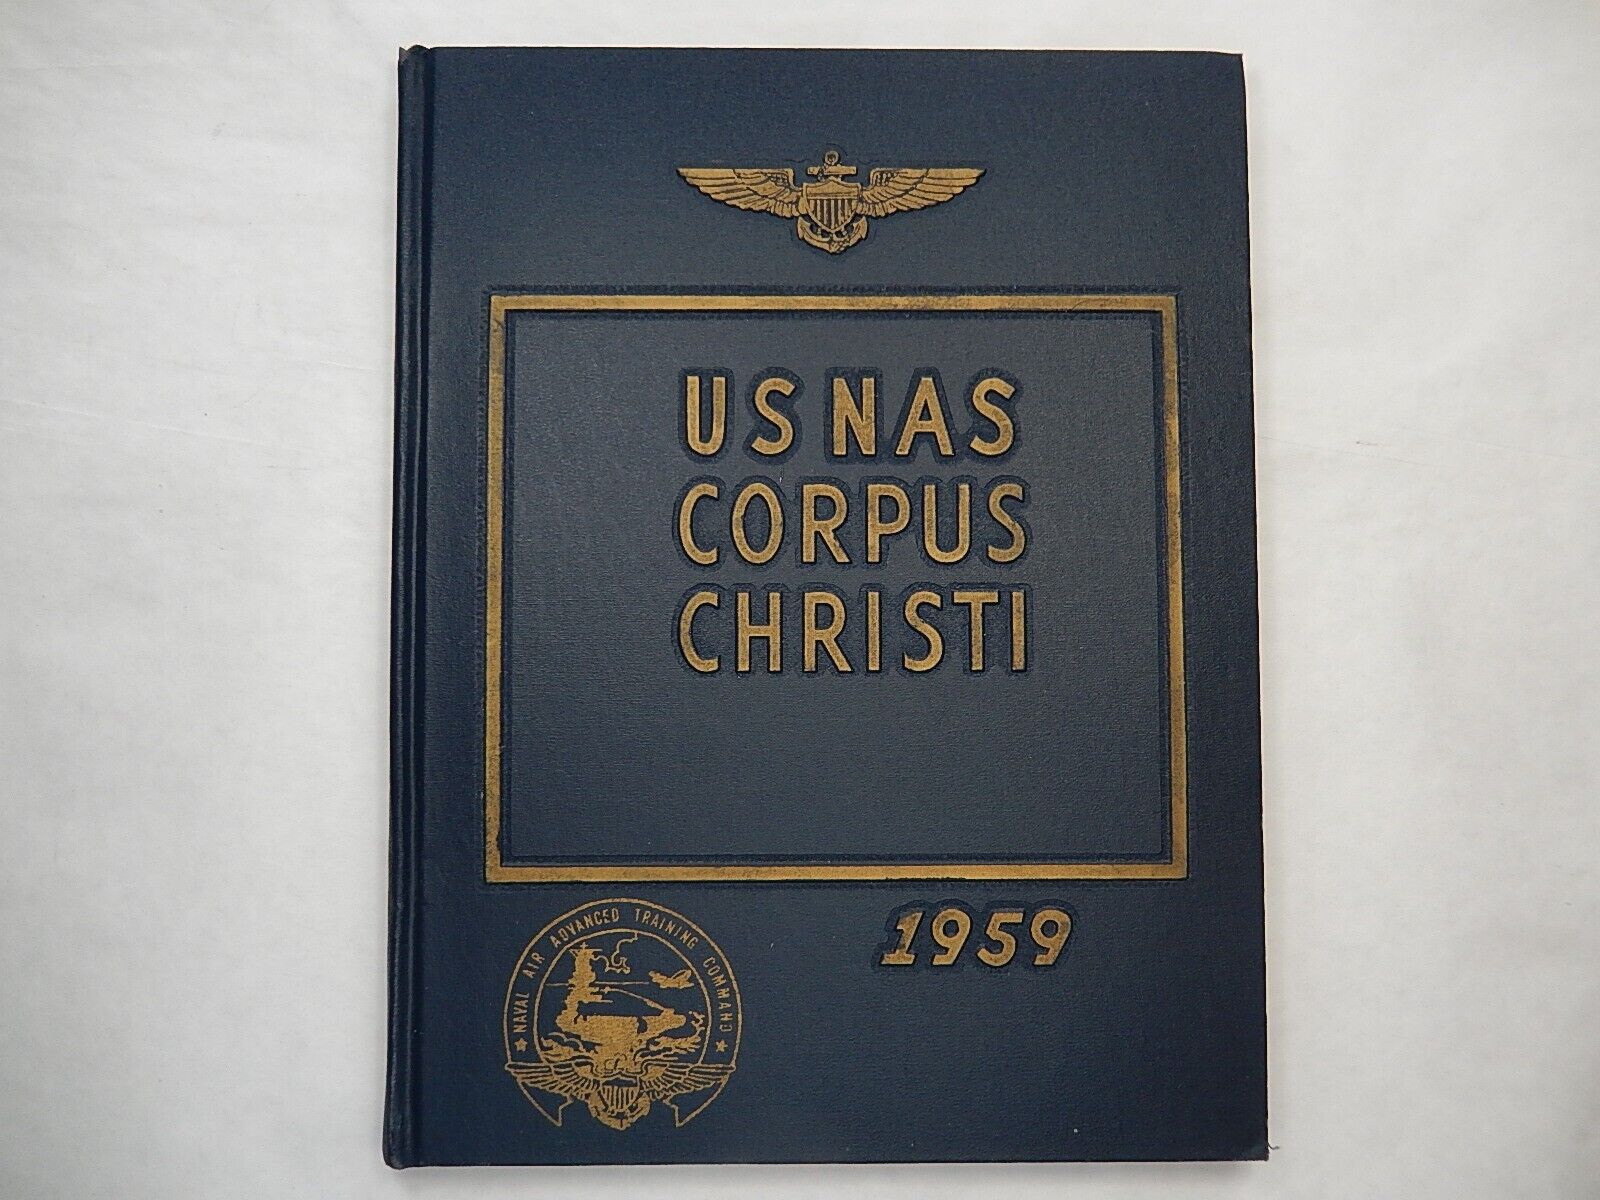 Yearbook, U.S. Naval Air Station, Corpus Christi, 1959, John McCain & Mattingly